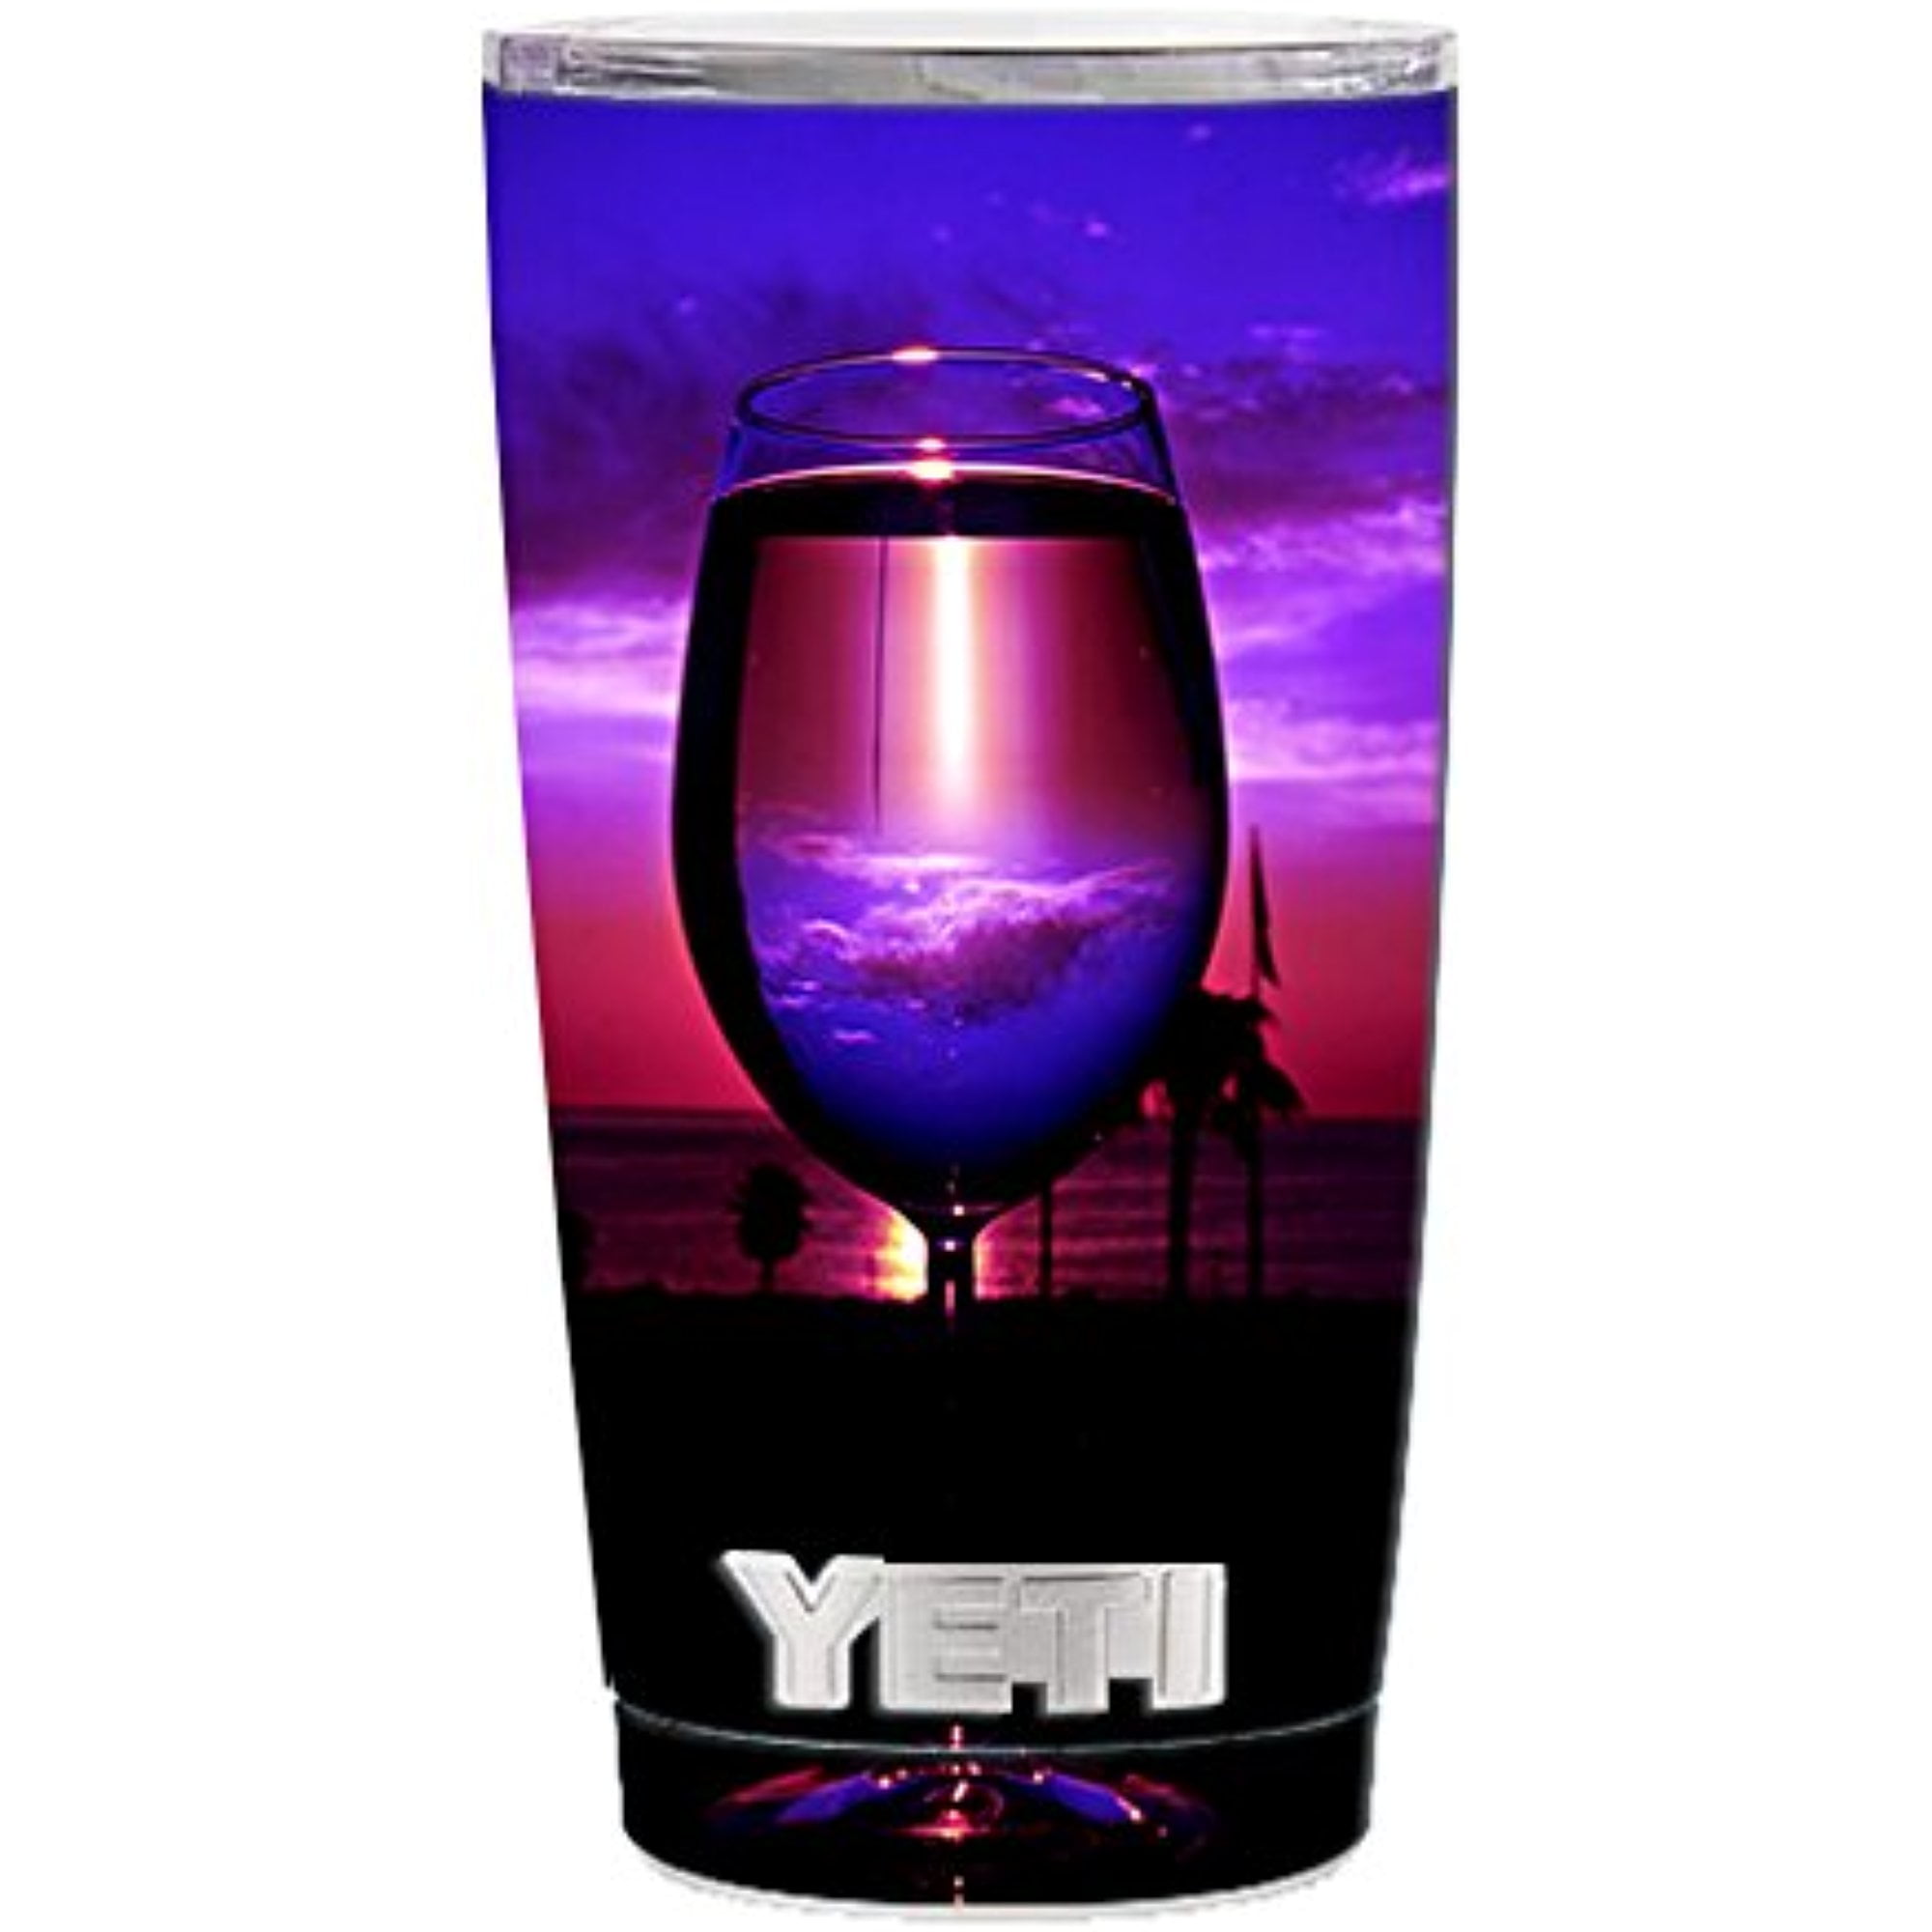 DecalGirl Y20-PURPLEBURST Yeti Rambler 20 oz Tumbler Skin - Purple